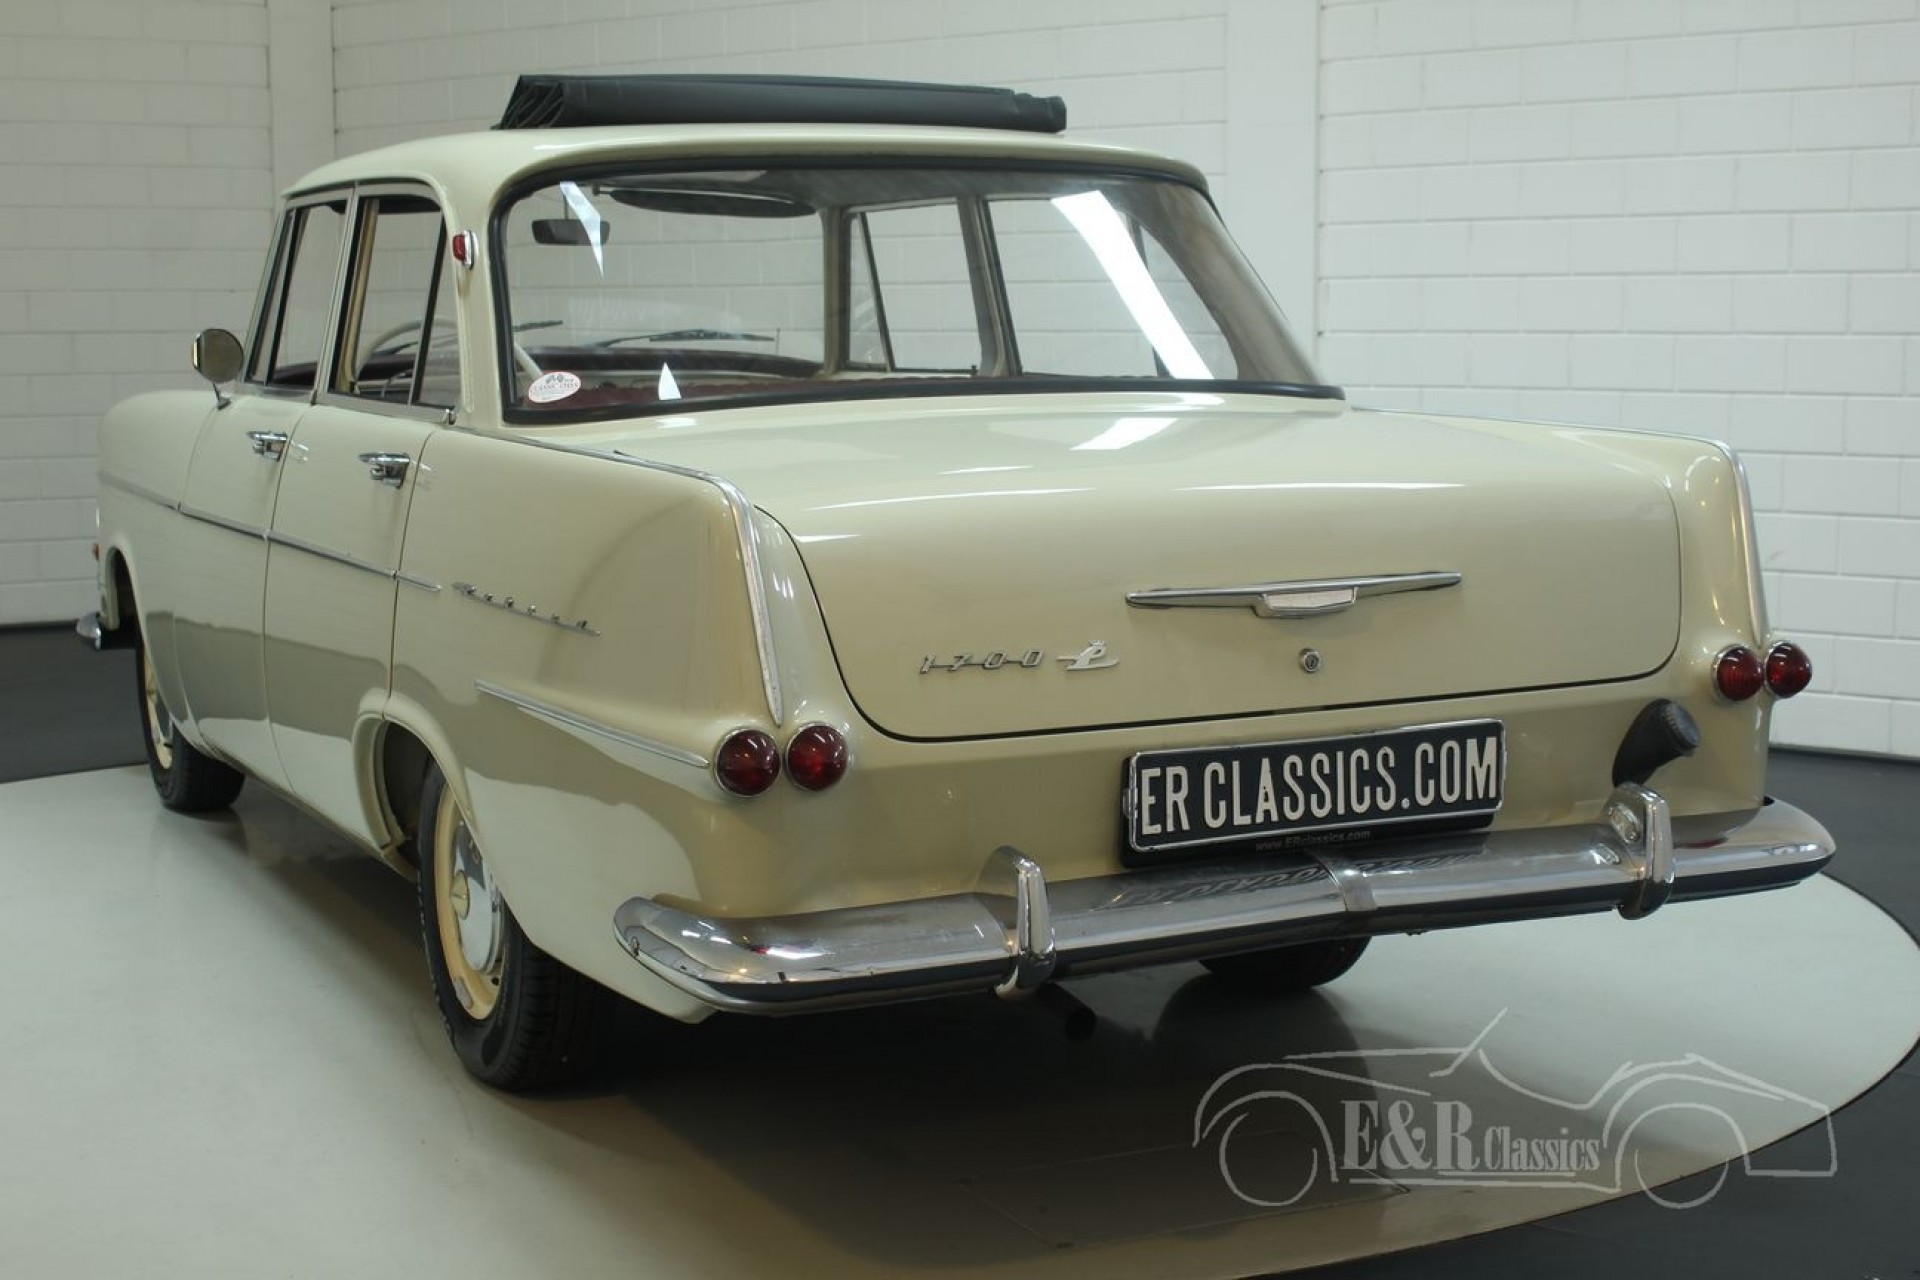 Ongeëvenaard de ober groet Opel Rekord Olympia P2 1700L 1961 for sale at Erclassics